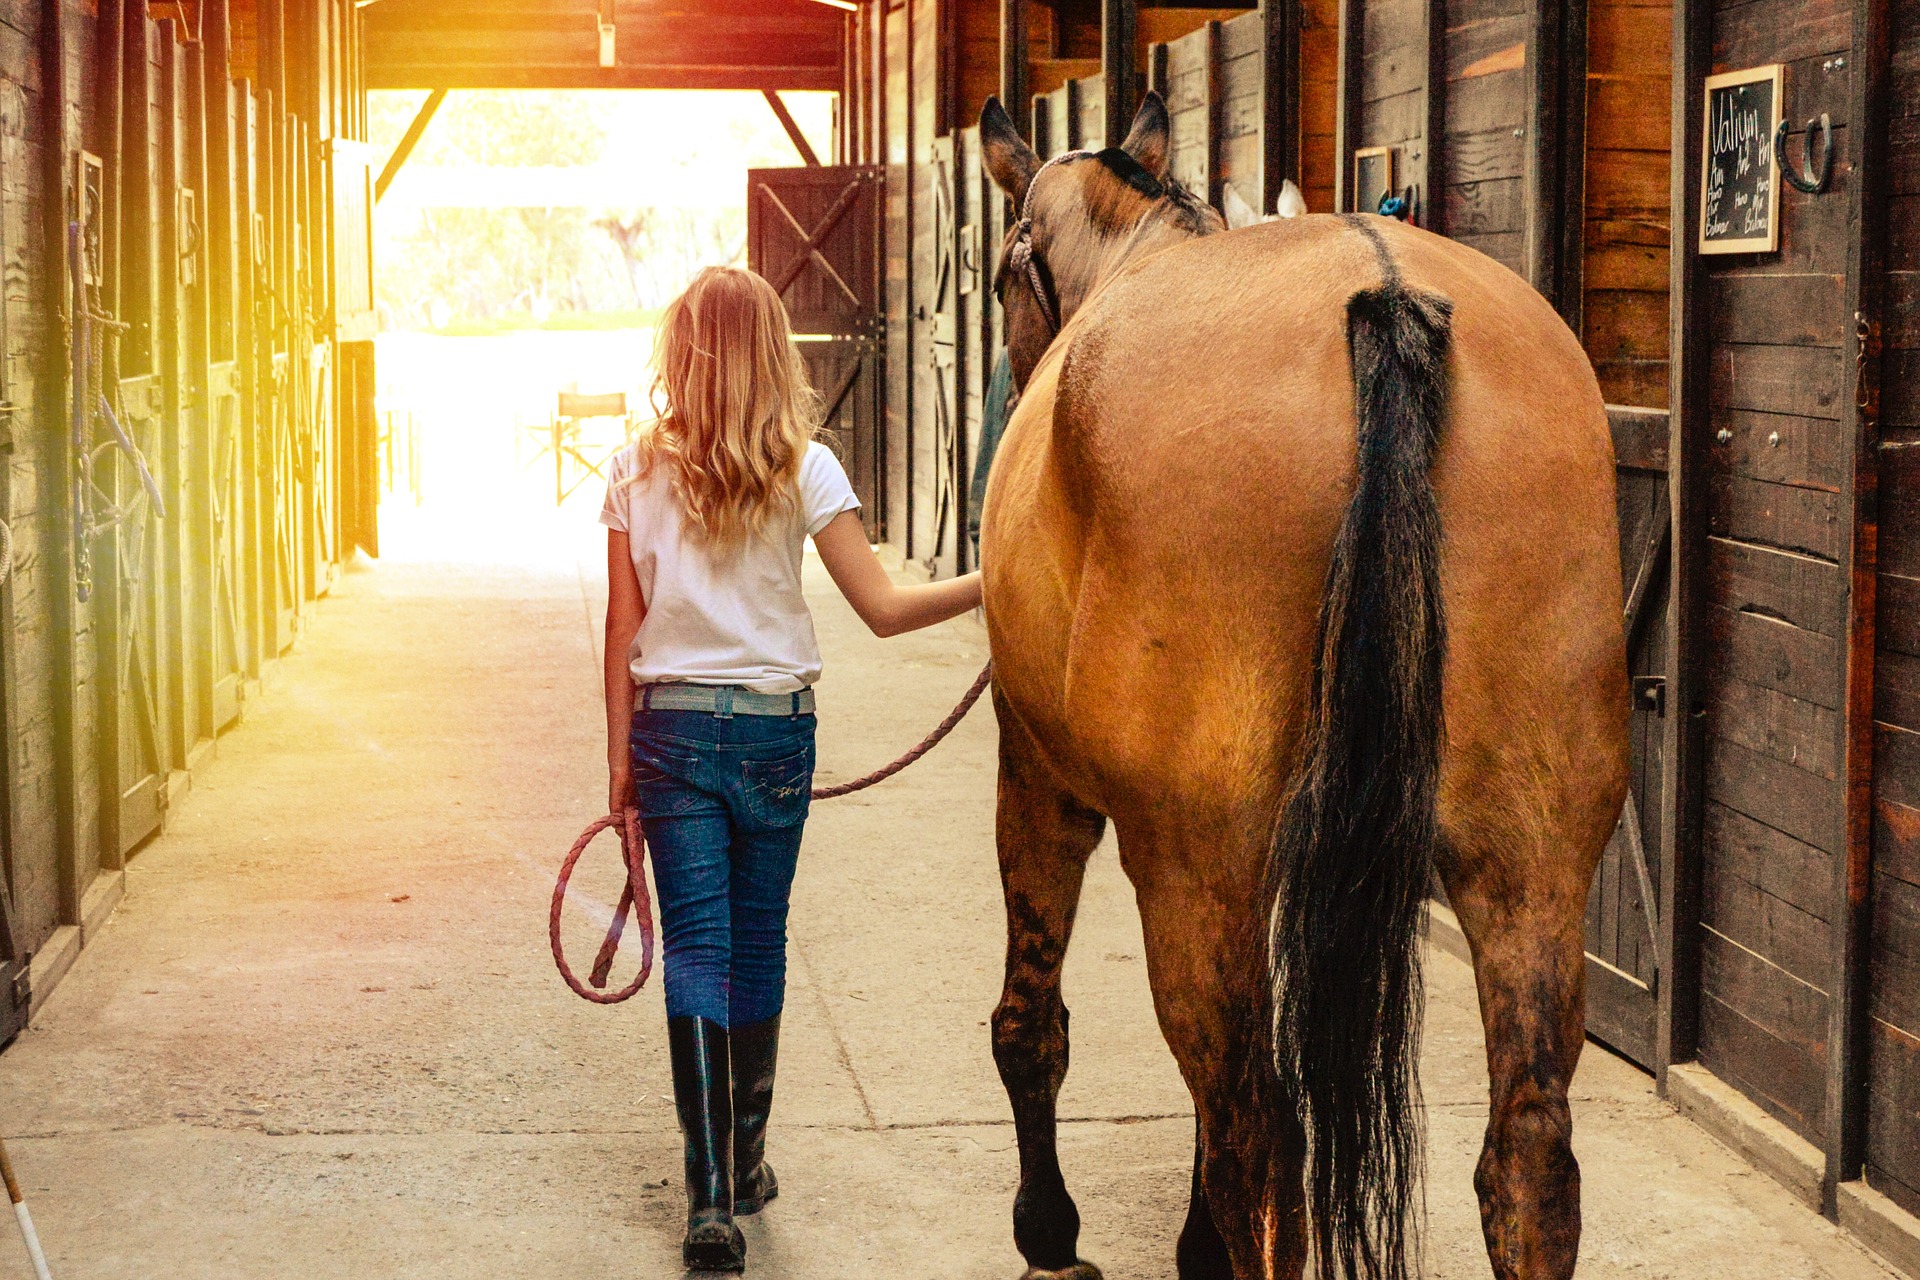 Girl walking horse down barn aisle